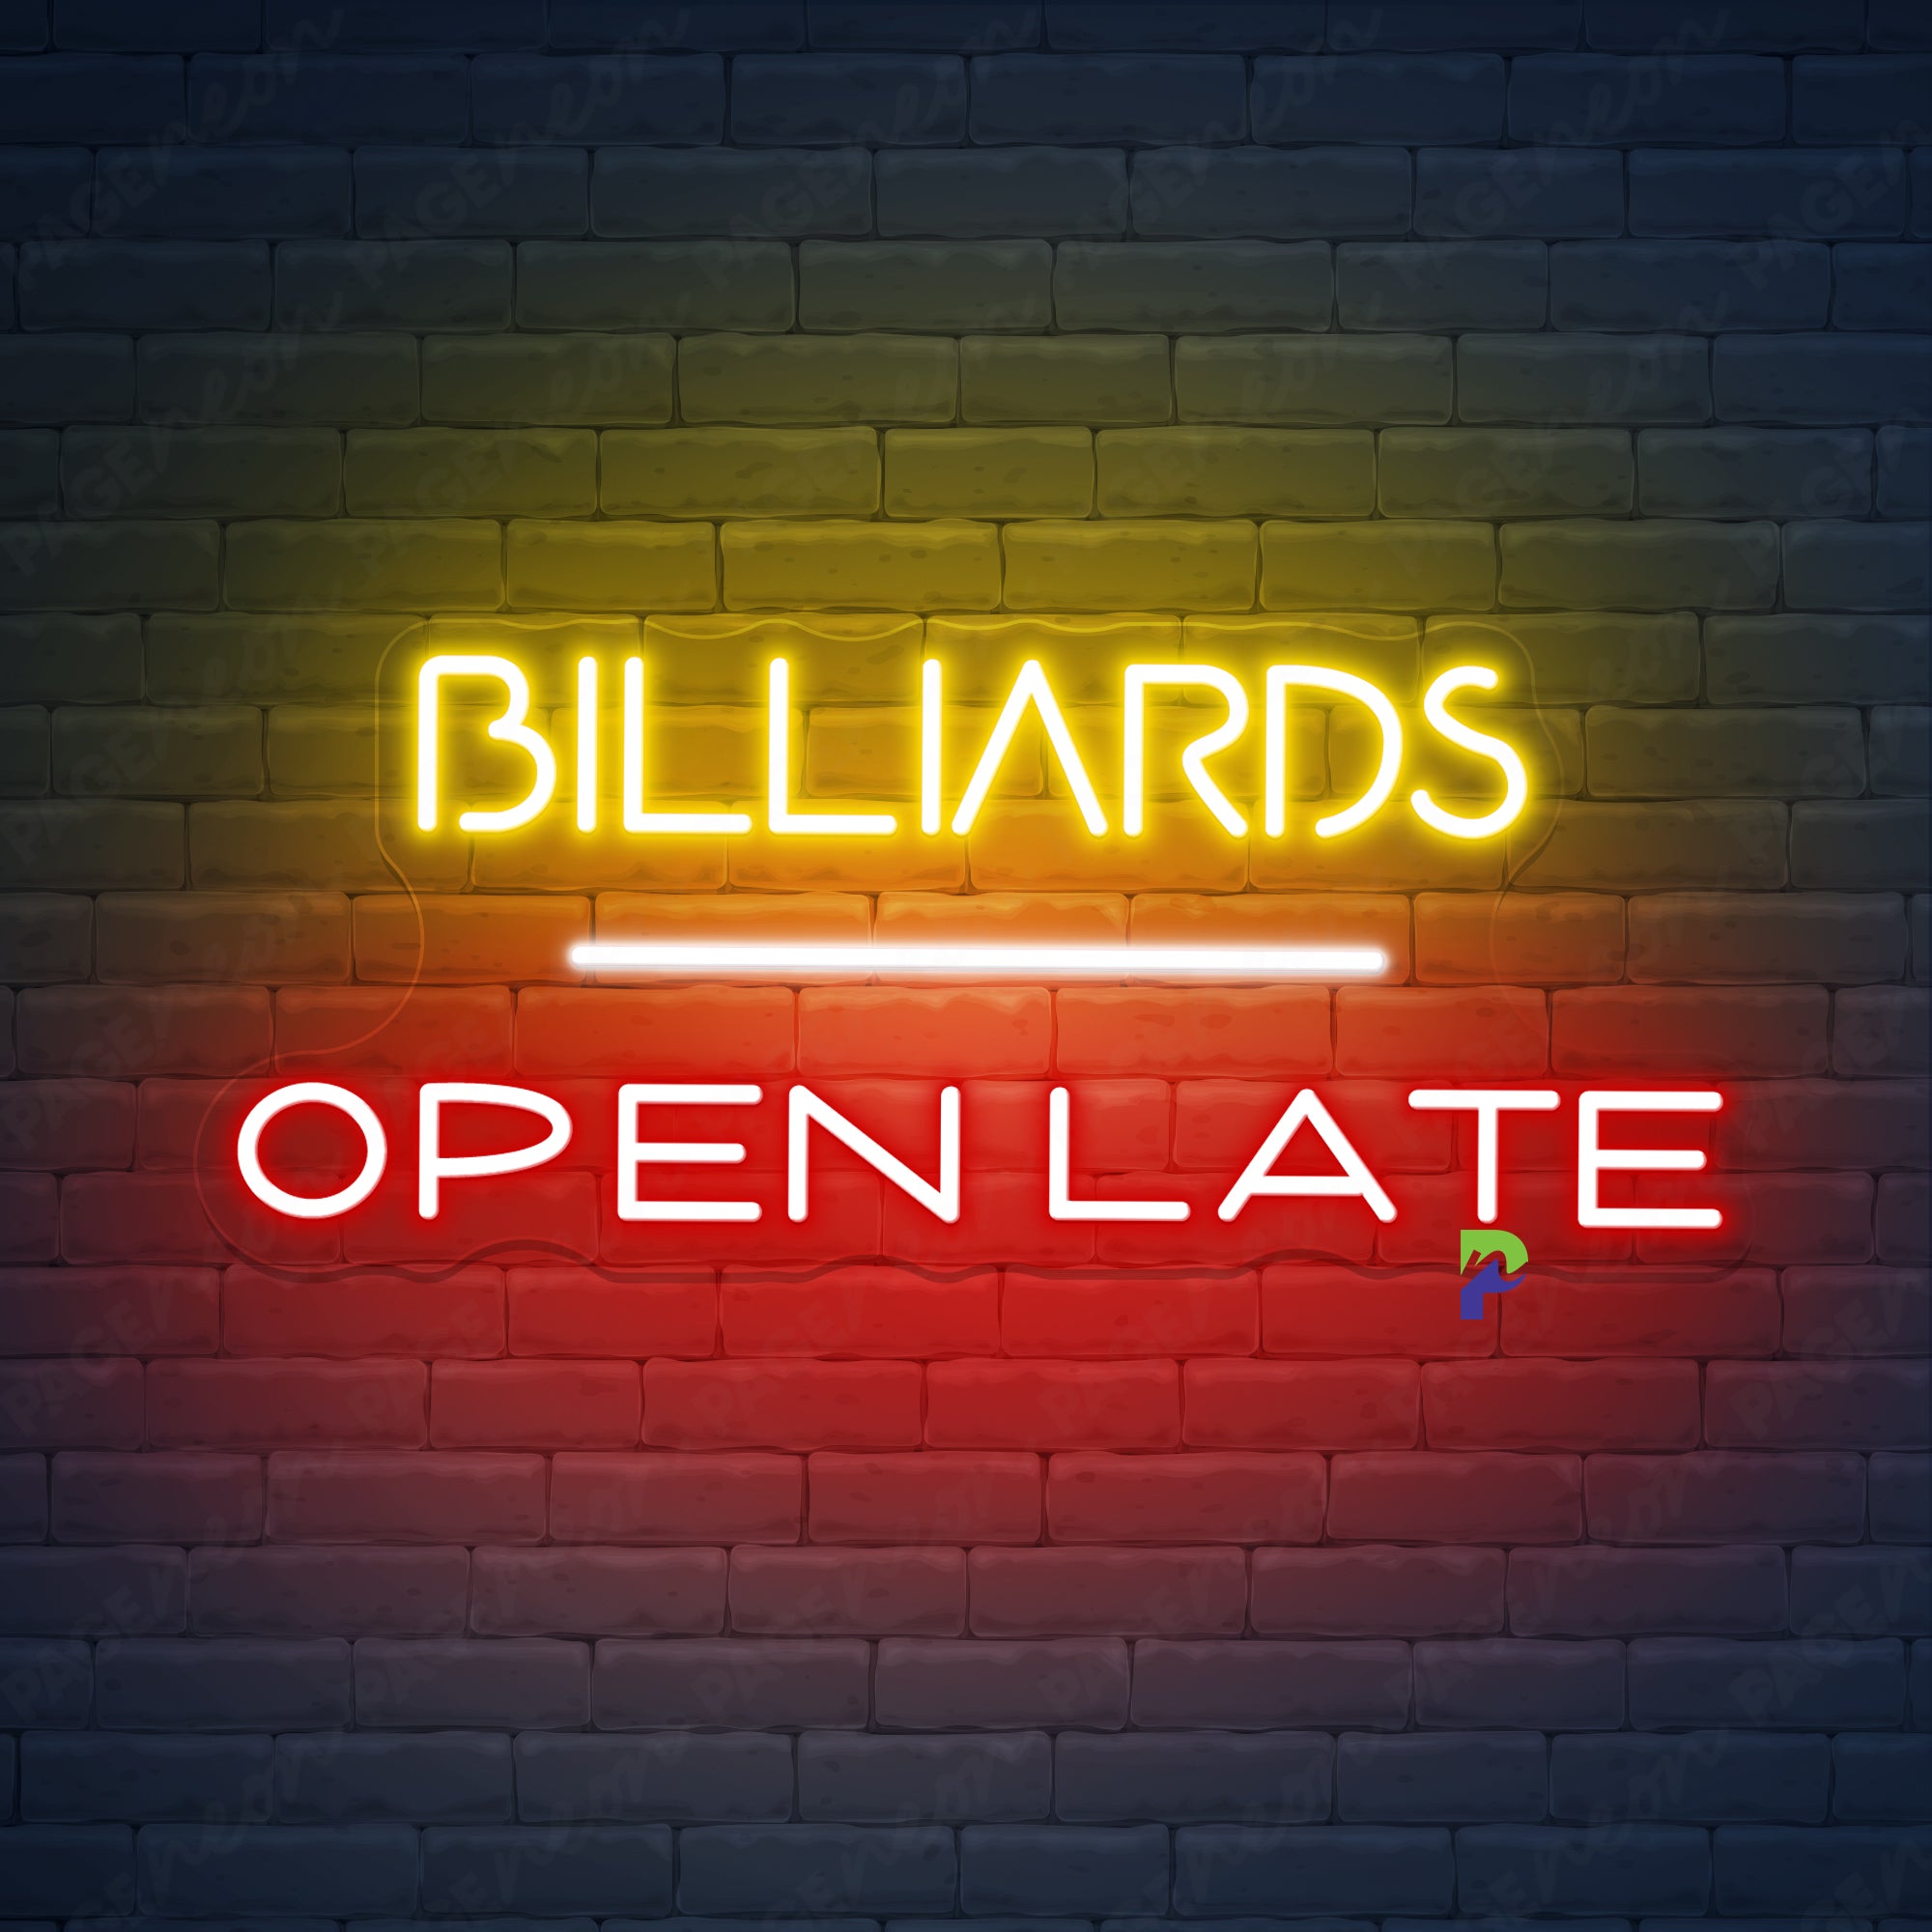 Billiards Neon Sign Open Late Led Light